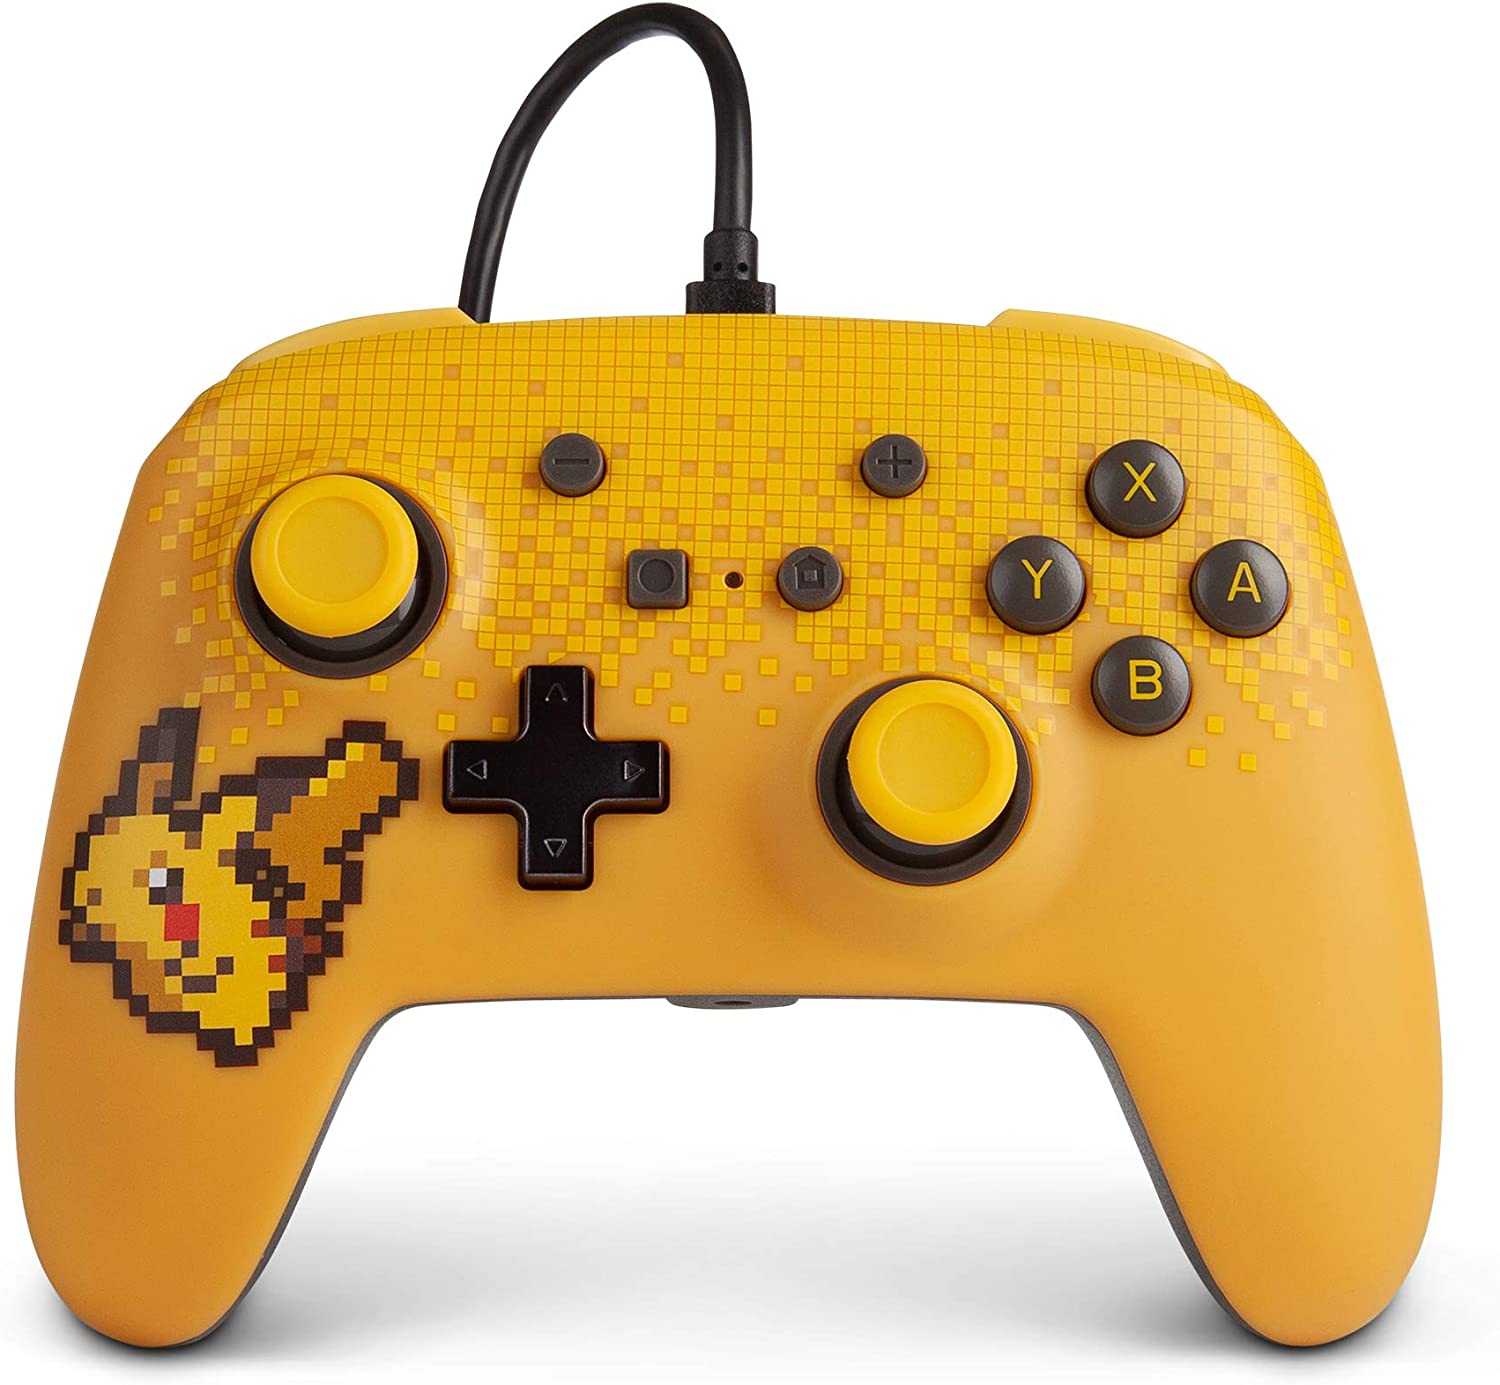 Control alámbrico PowerA Enhanced modelo Pixel Pikachu Pokémon (Switch)